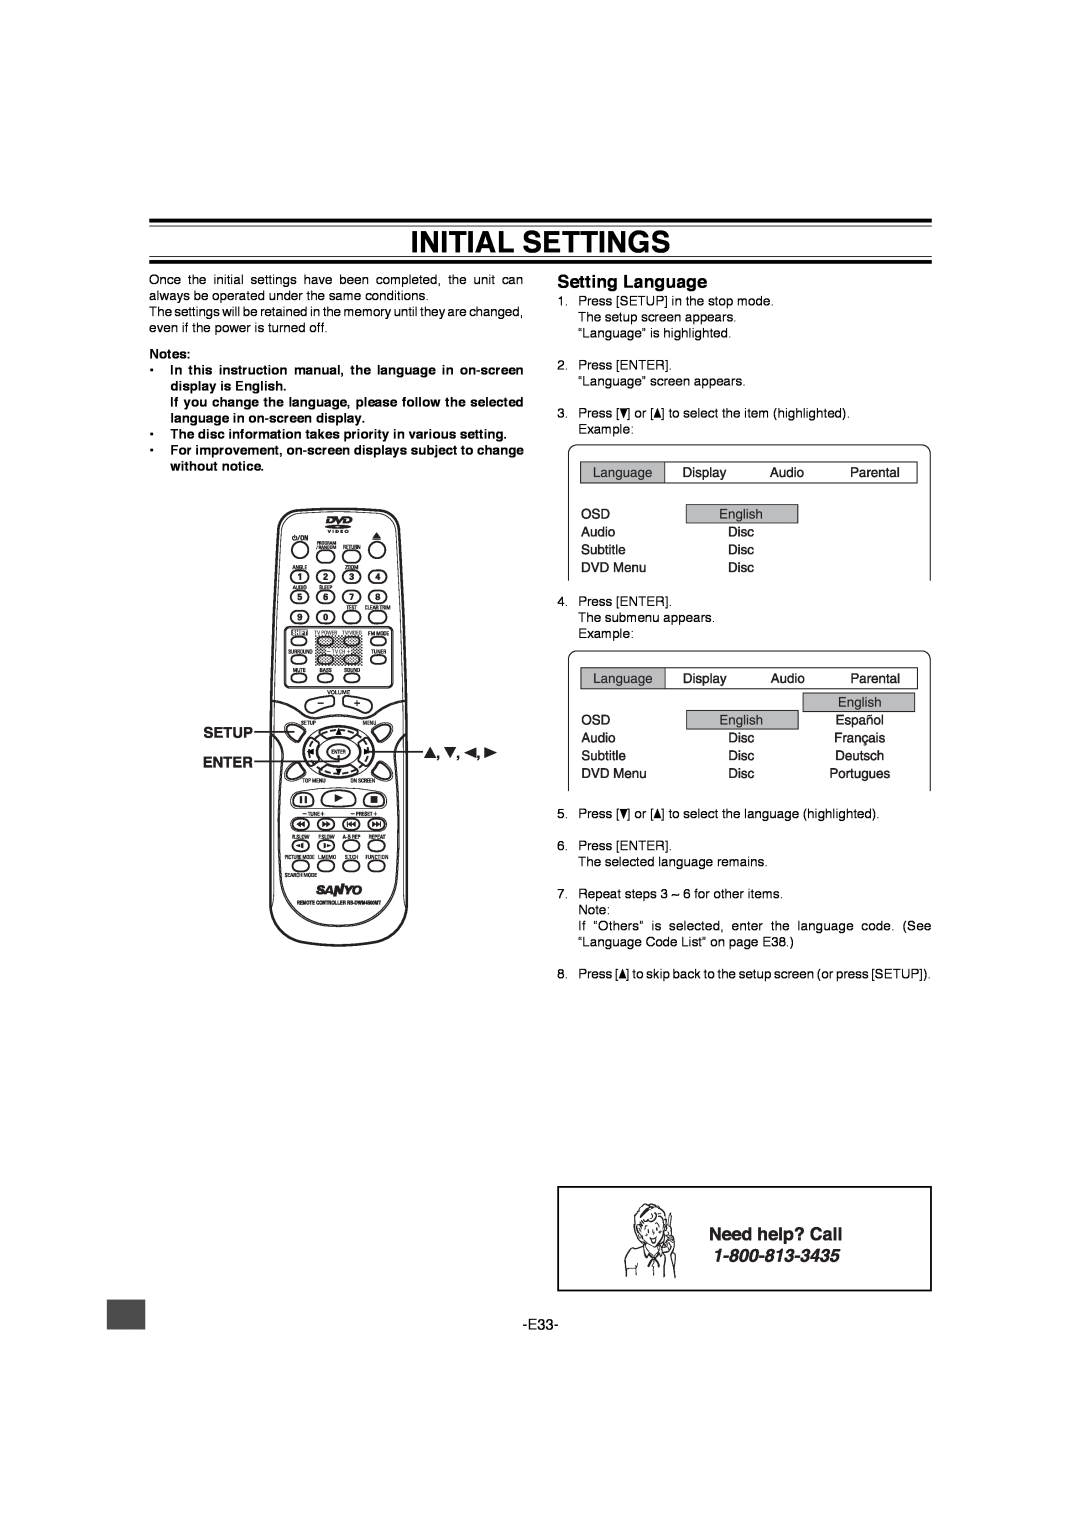 Sanyo DWM-4500 instruction manual Initial Settings, Setting Language 